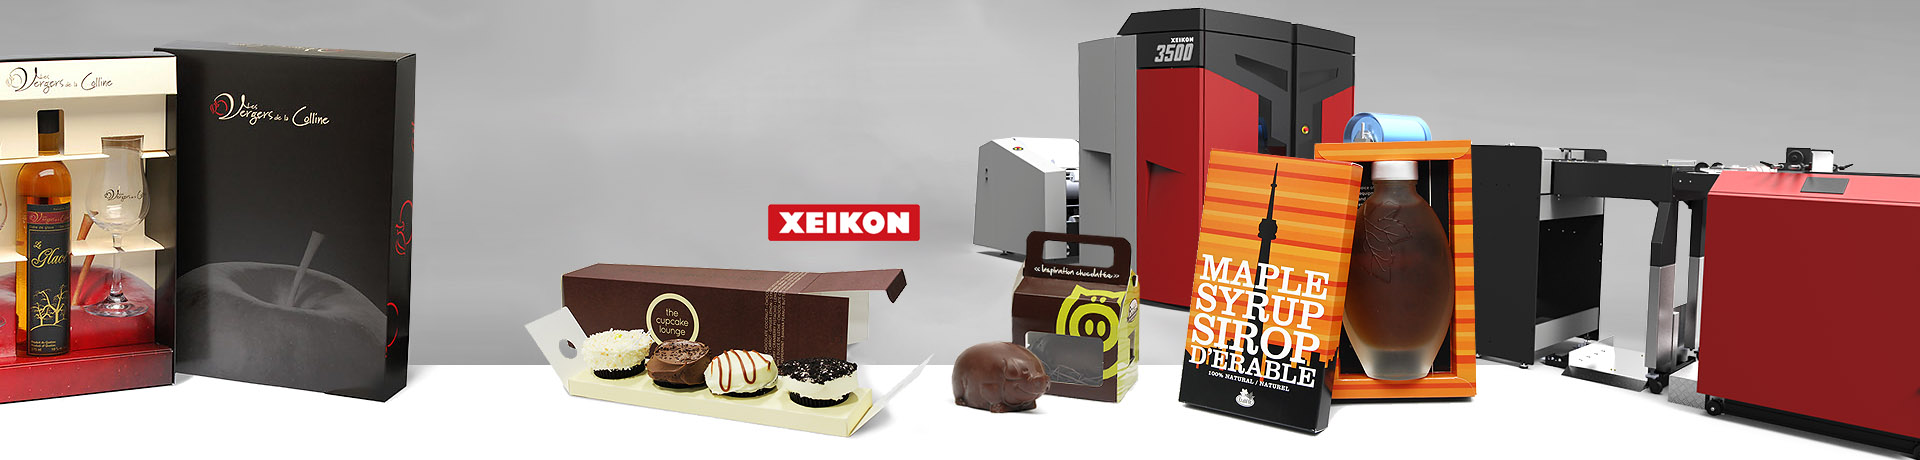 Xeikon - Digital Folding Carton - Caixas Dobráveis